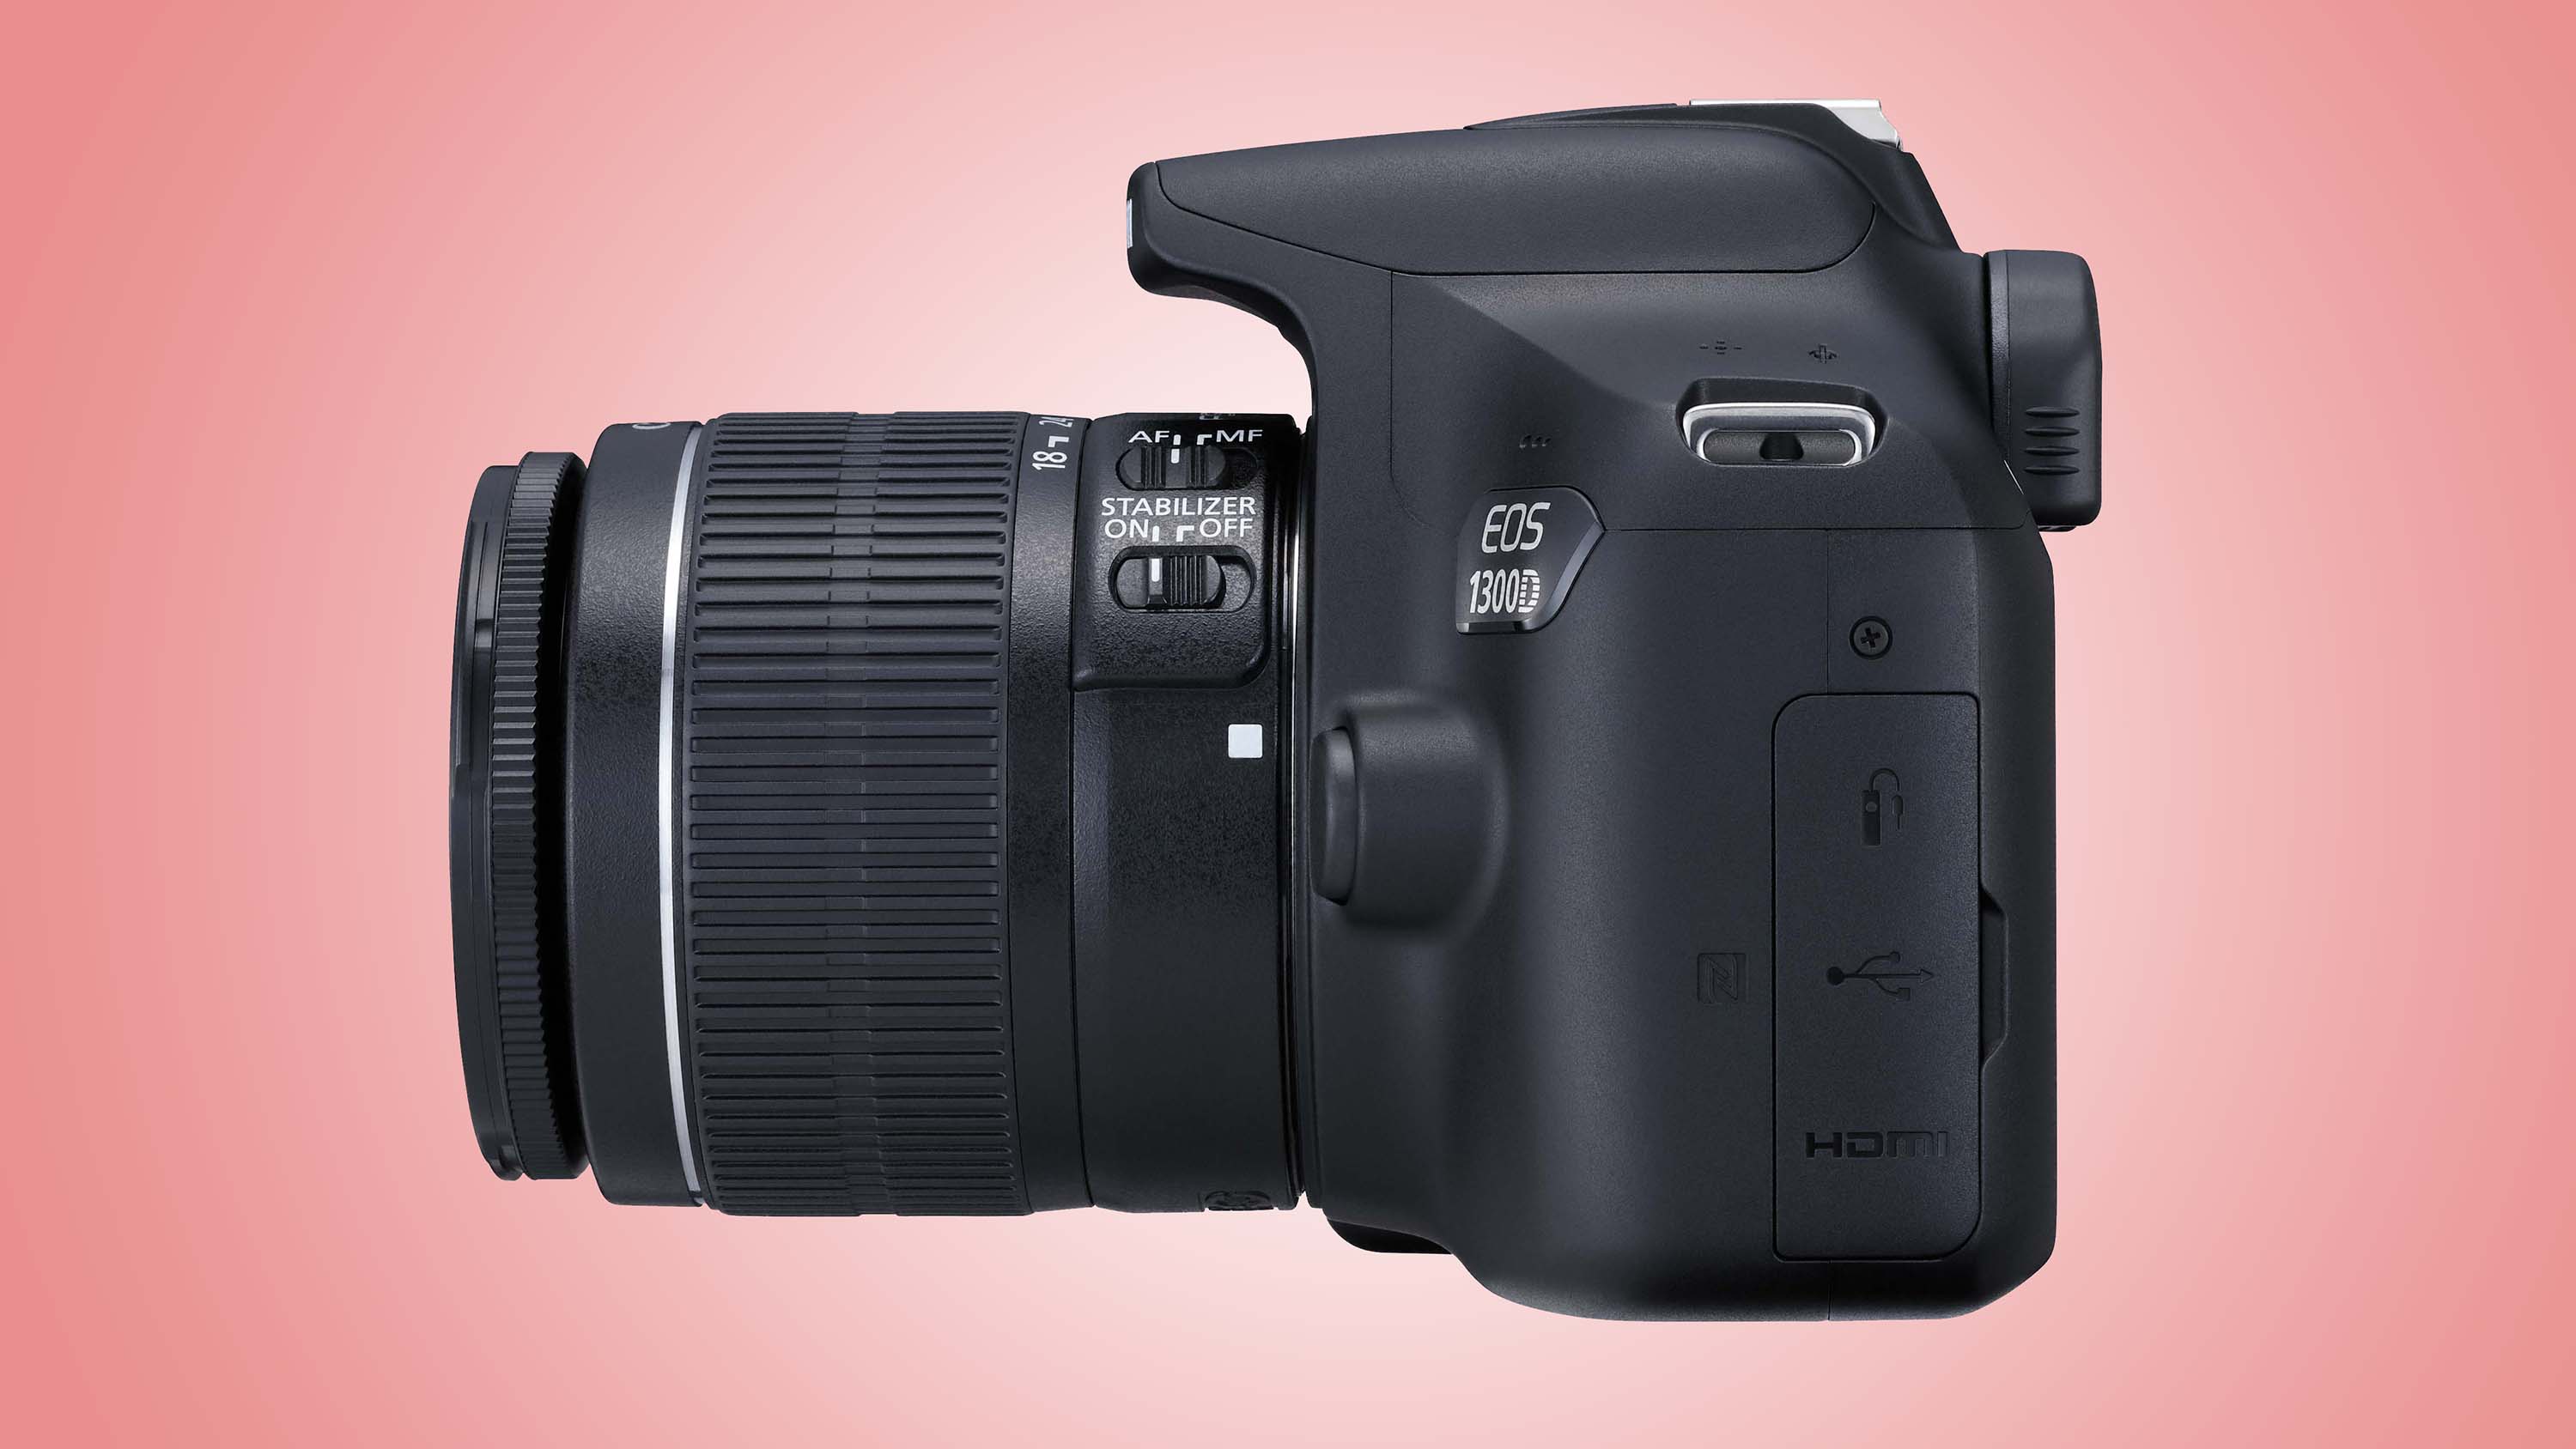 Canon EOS 1300D review